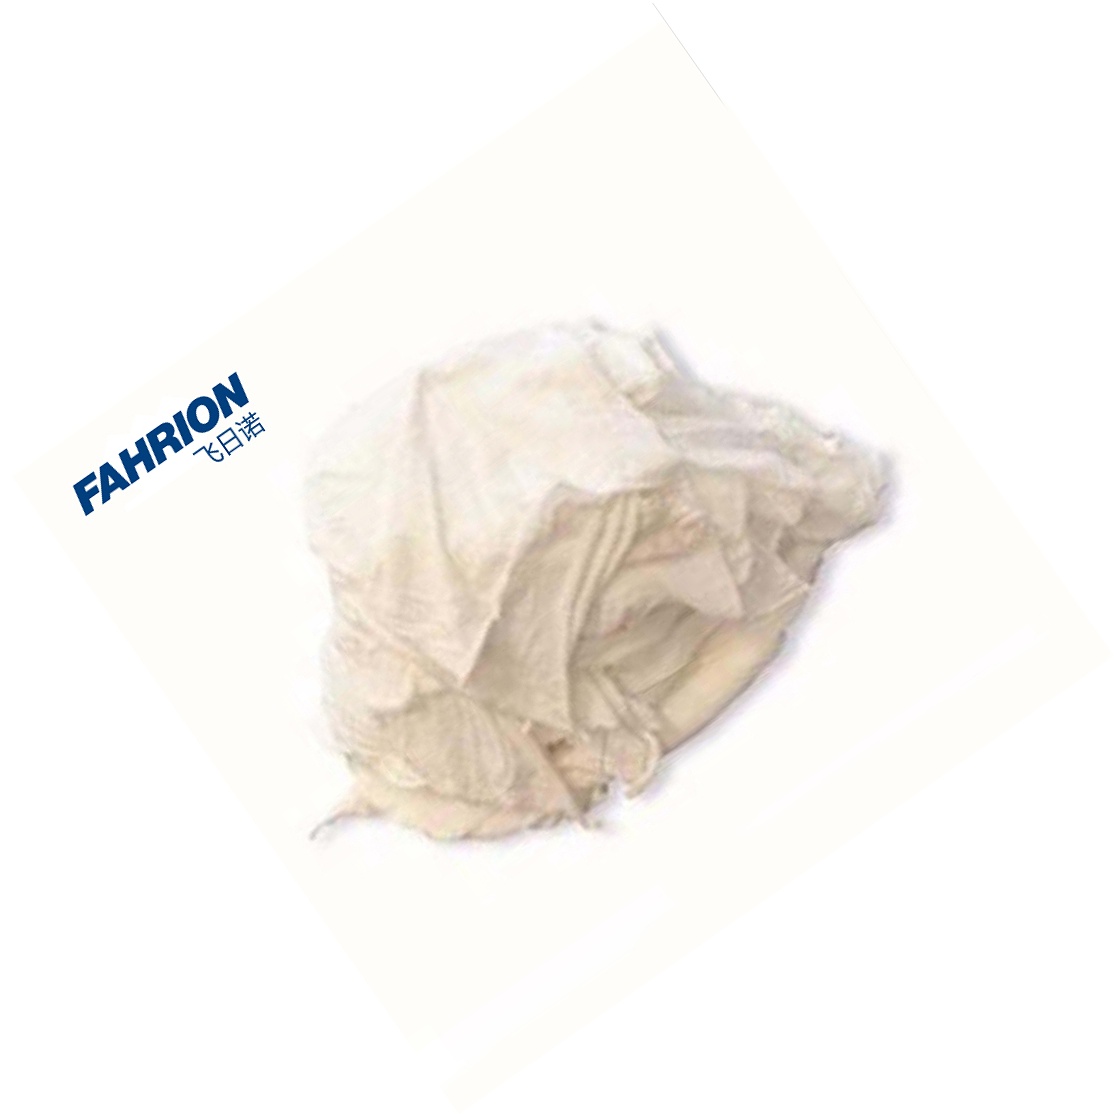 FAHRION 工业涤棉抹布 GD99-900-1560